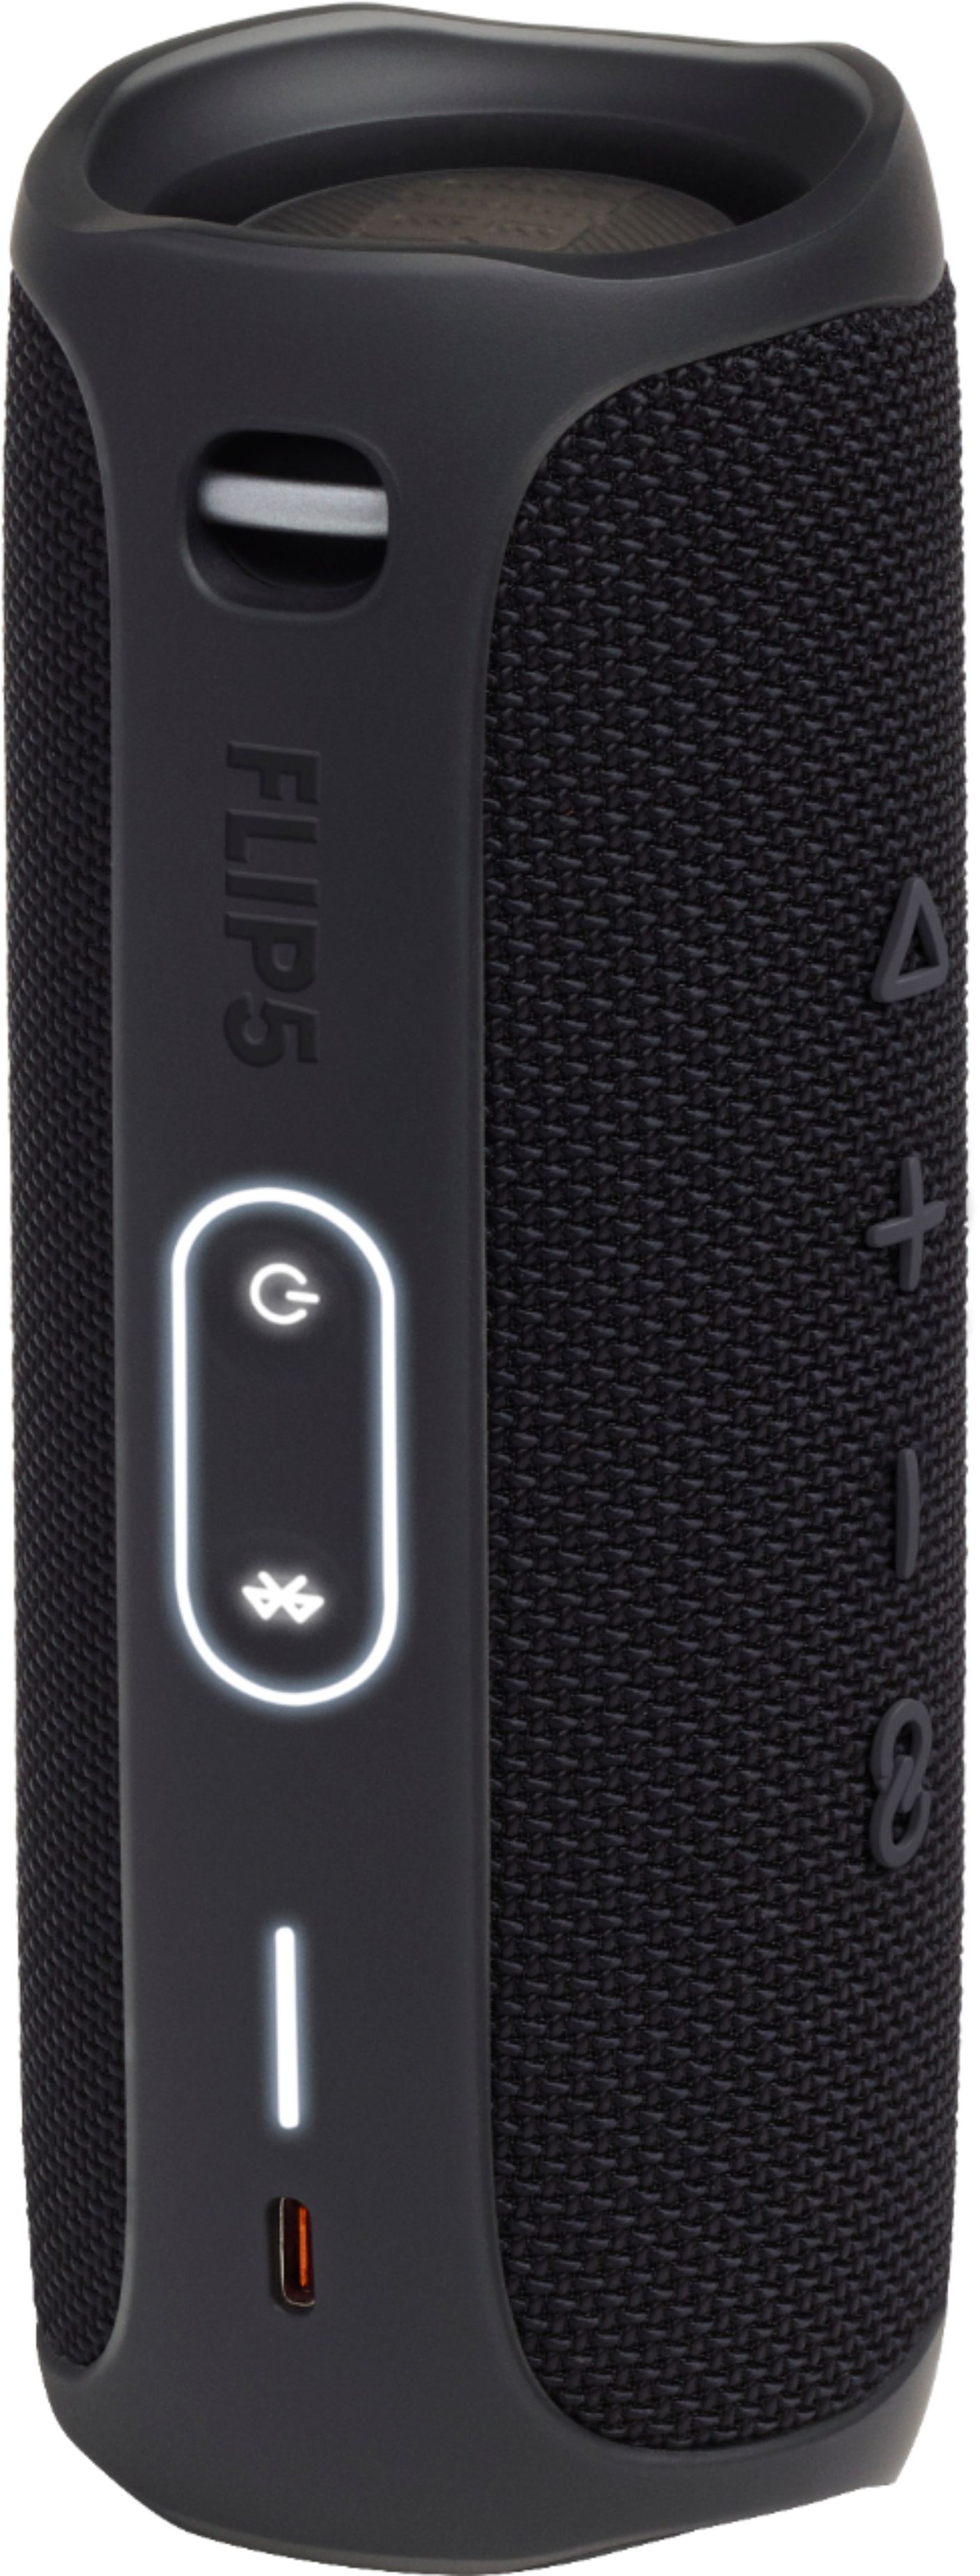 JBL Flip 5 Portable Bluetooth Speaker Black JBLFLIP5BLKAM Best Buy